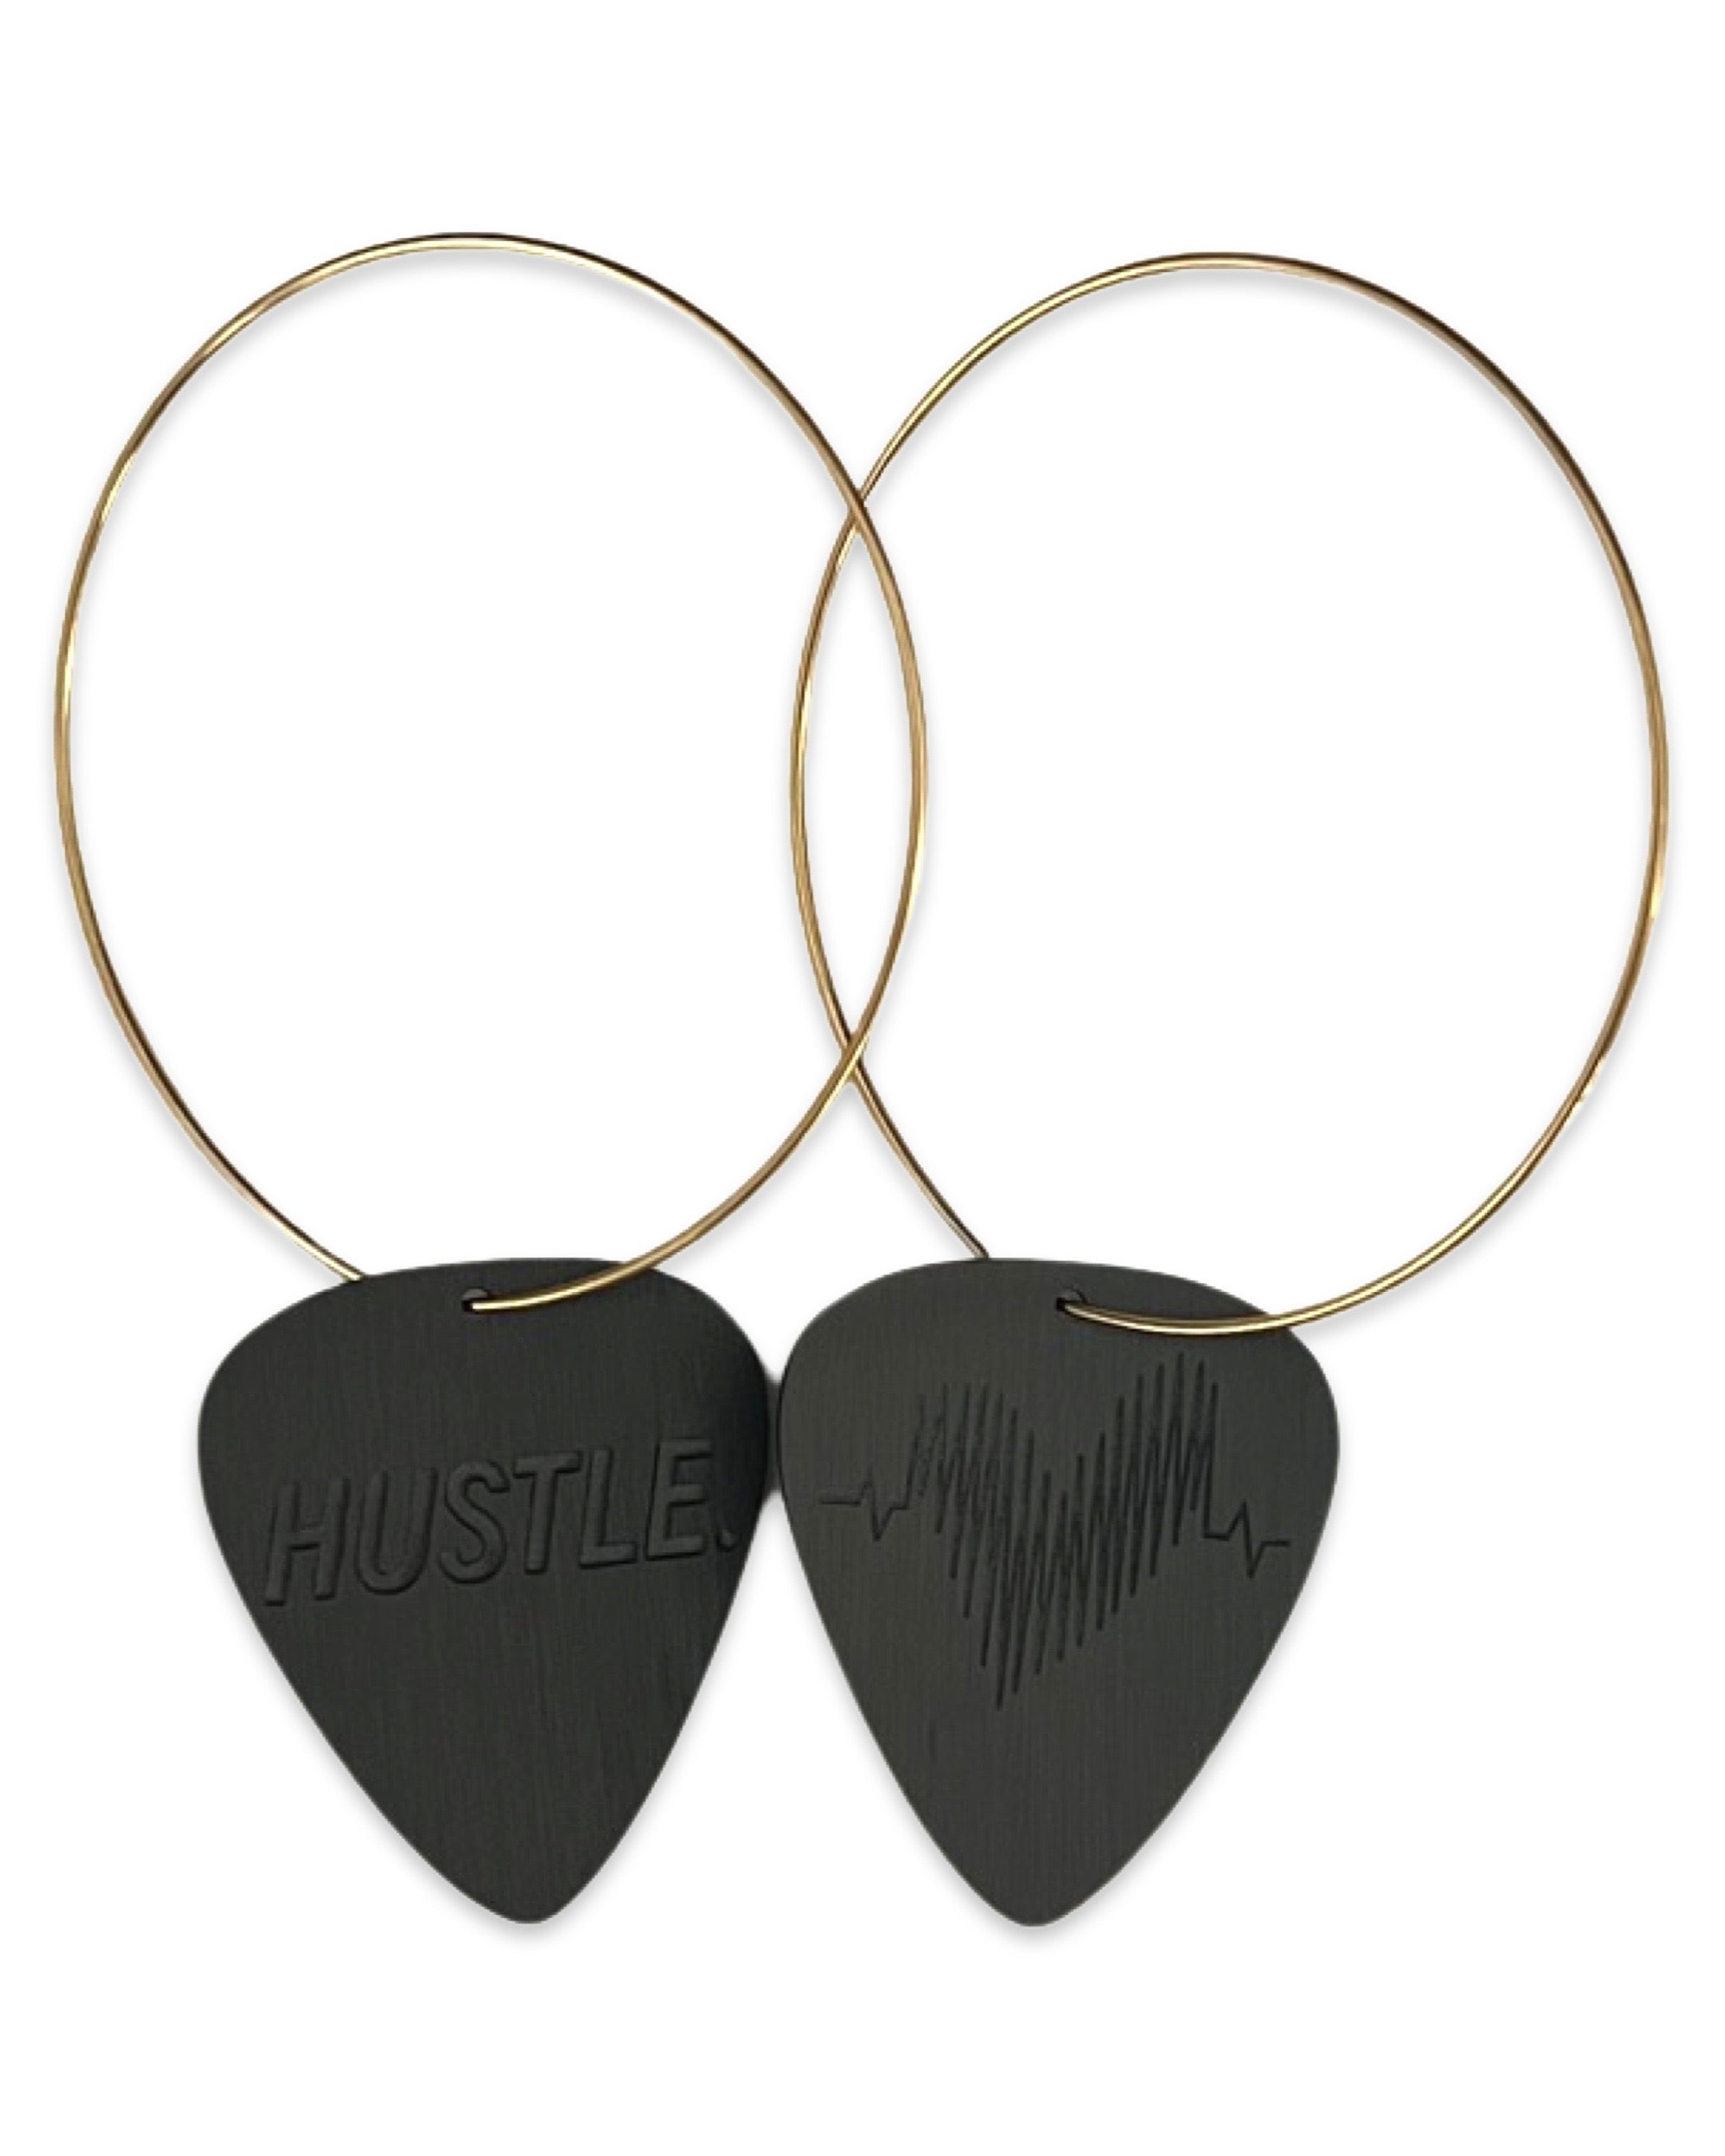 HUSTLE. Black Steel Reversible Single Guitar Pick Earrings